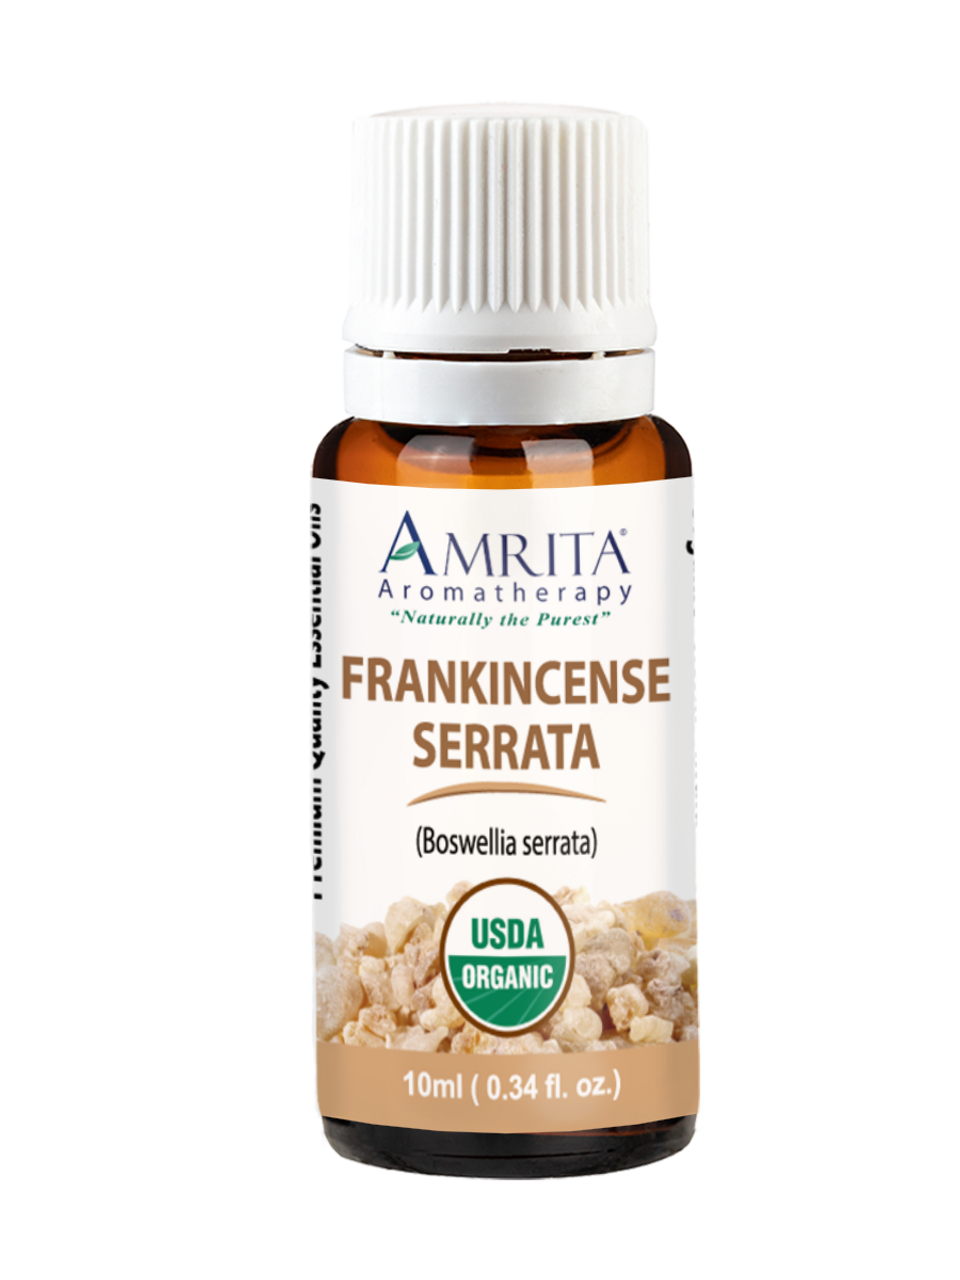 Rose & Frank (5ml) organic essential oils aromatherapy blend